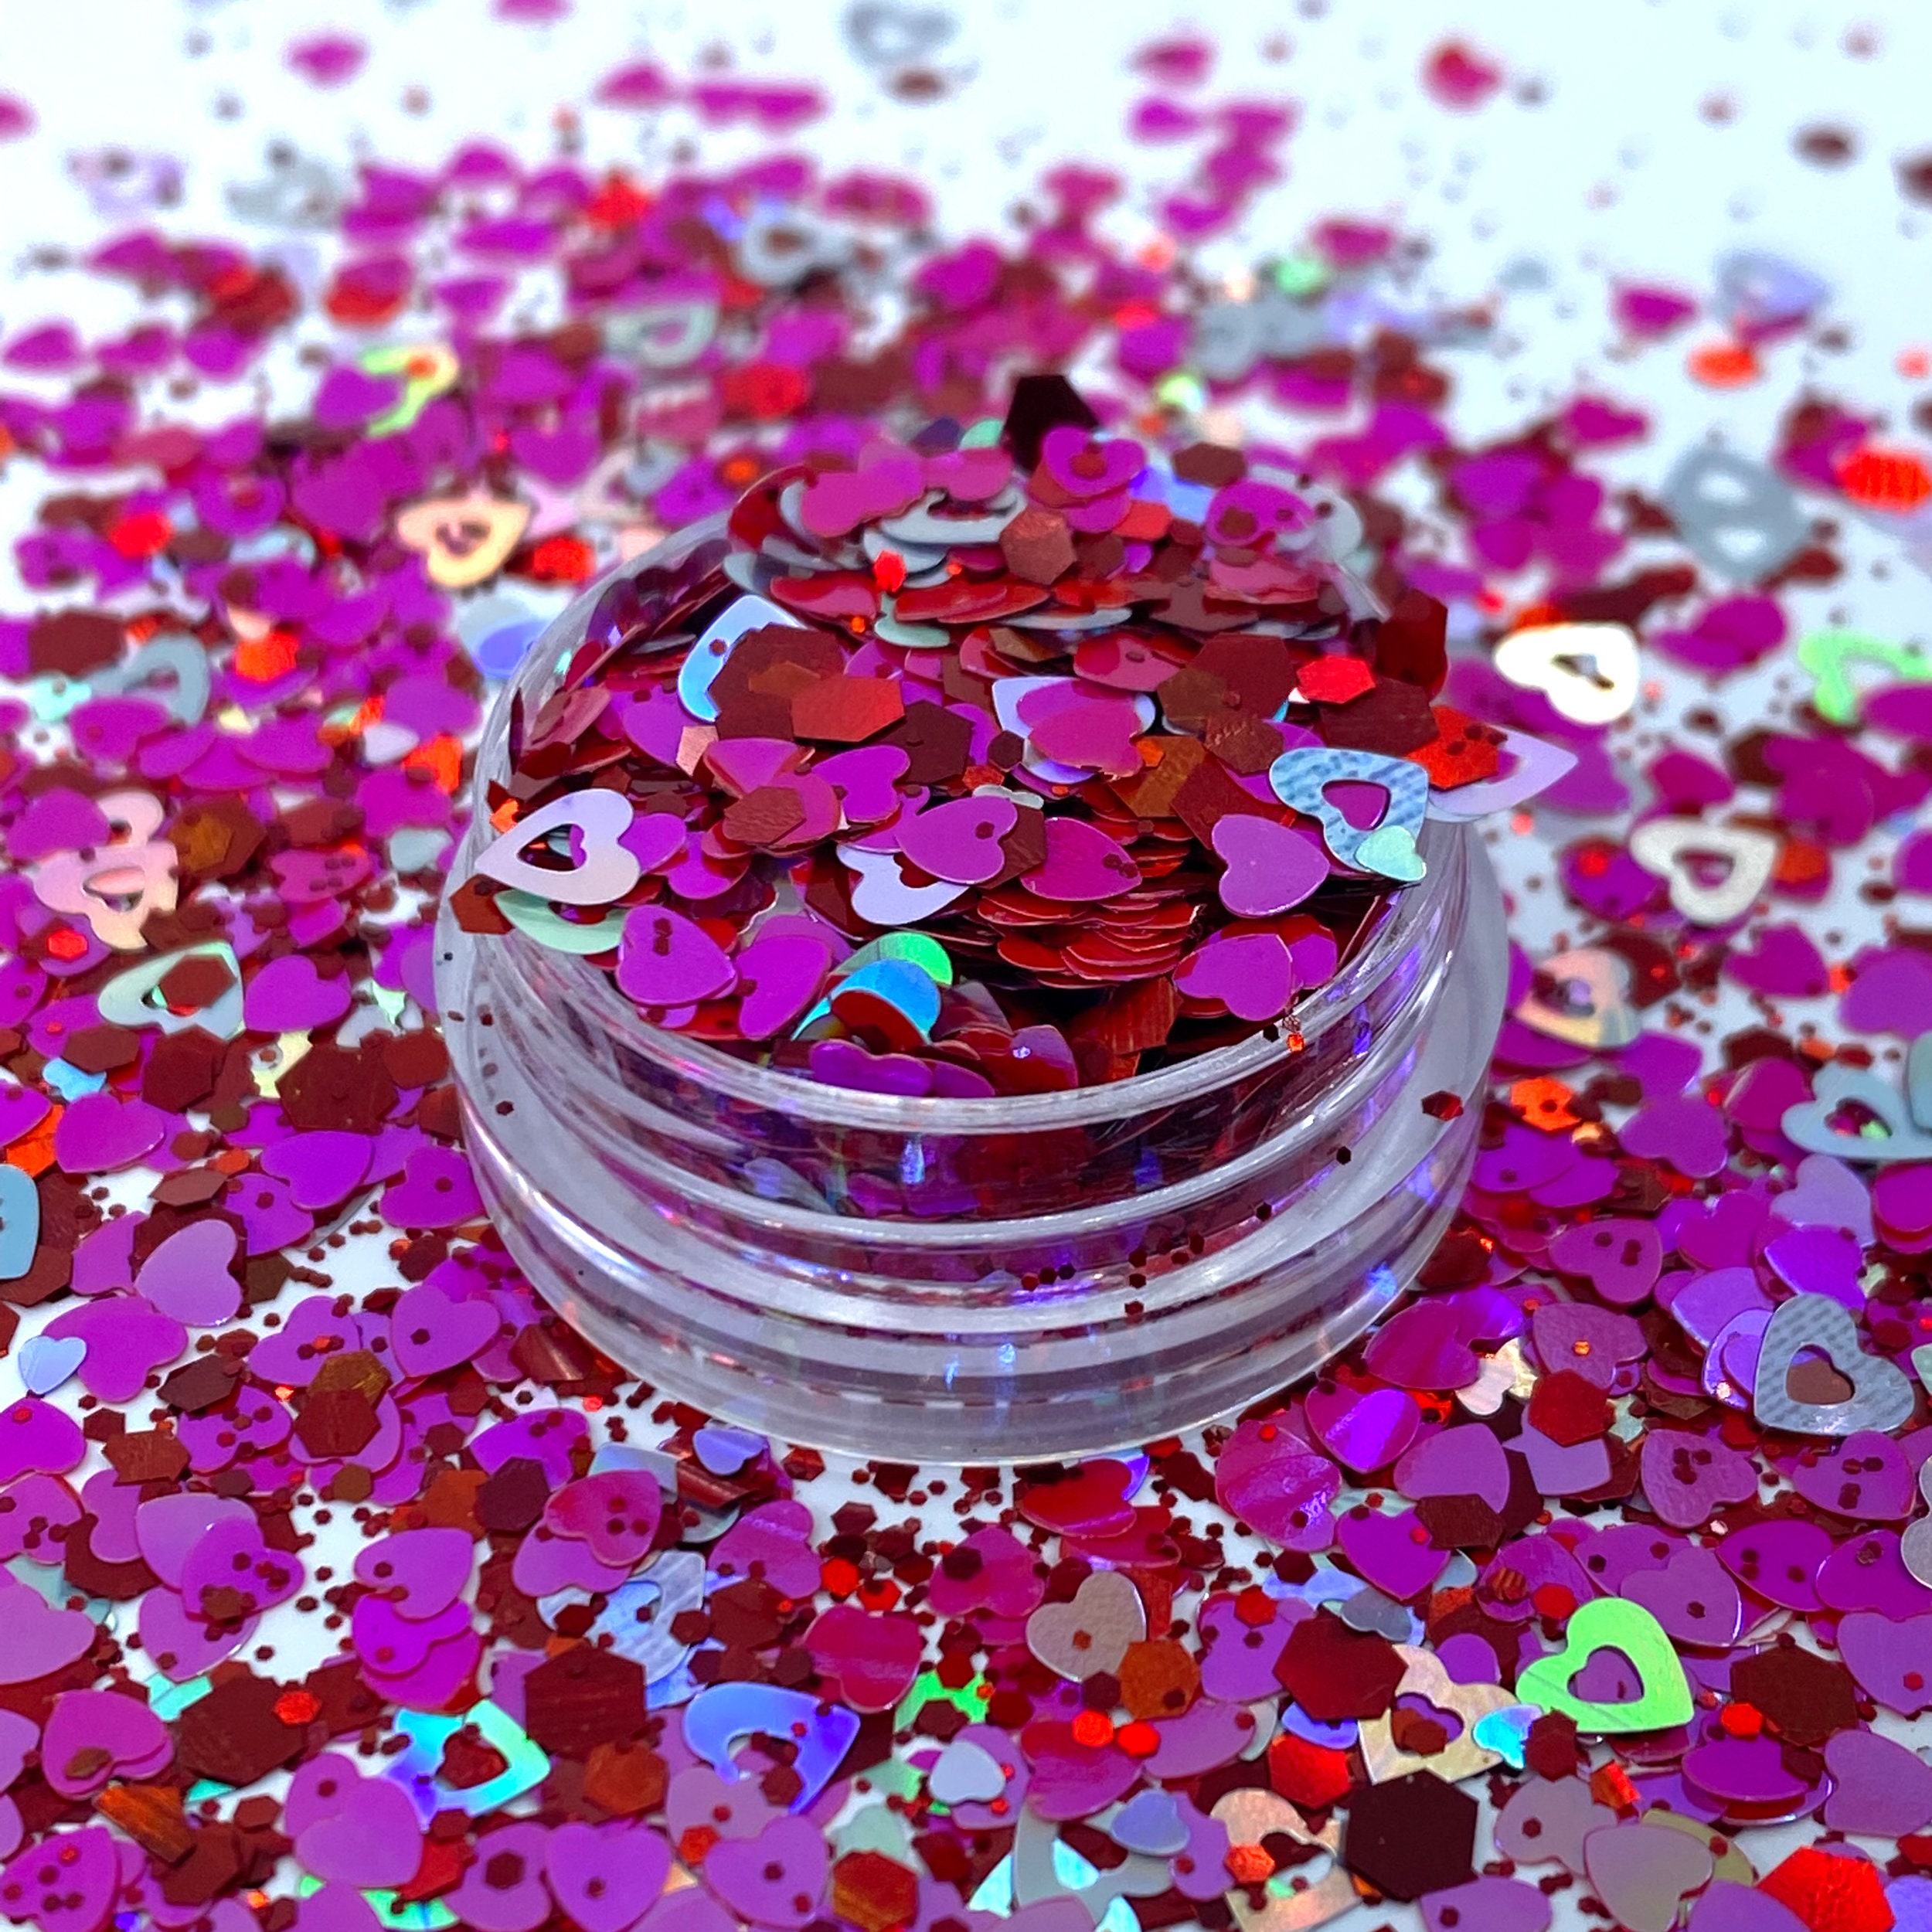 Nail Art Glitter *Sprinkles* Pink Snowflakes Stars Iridescent Hexagon Mix  Pot